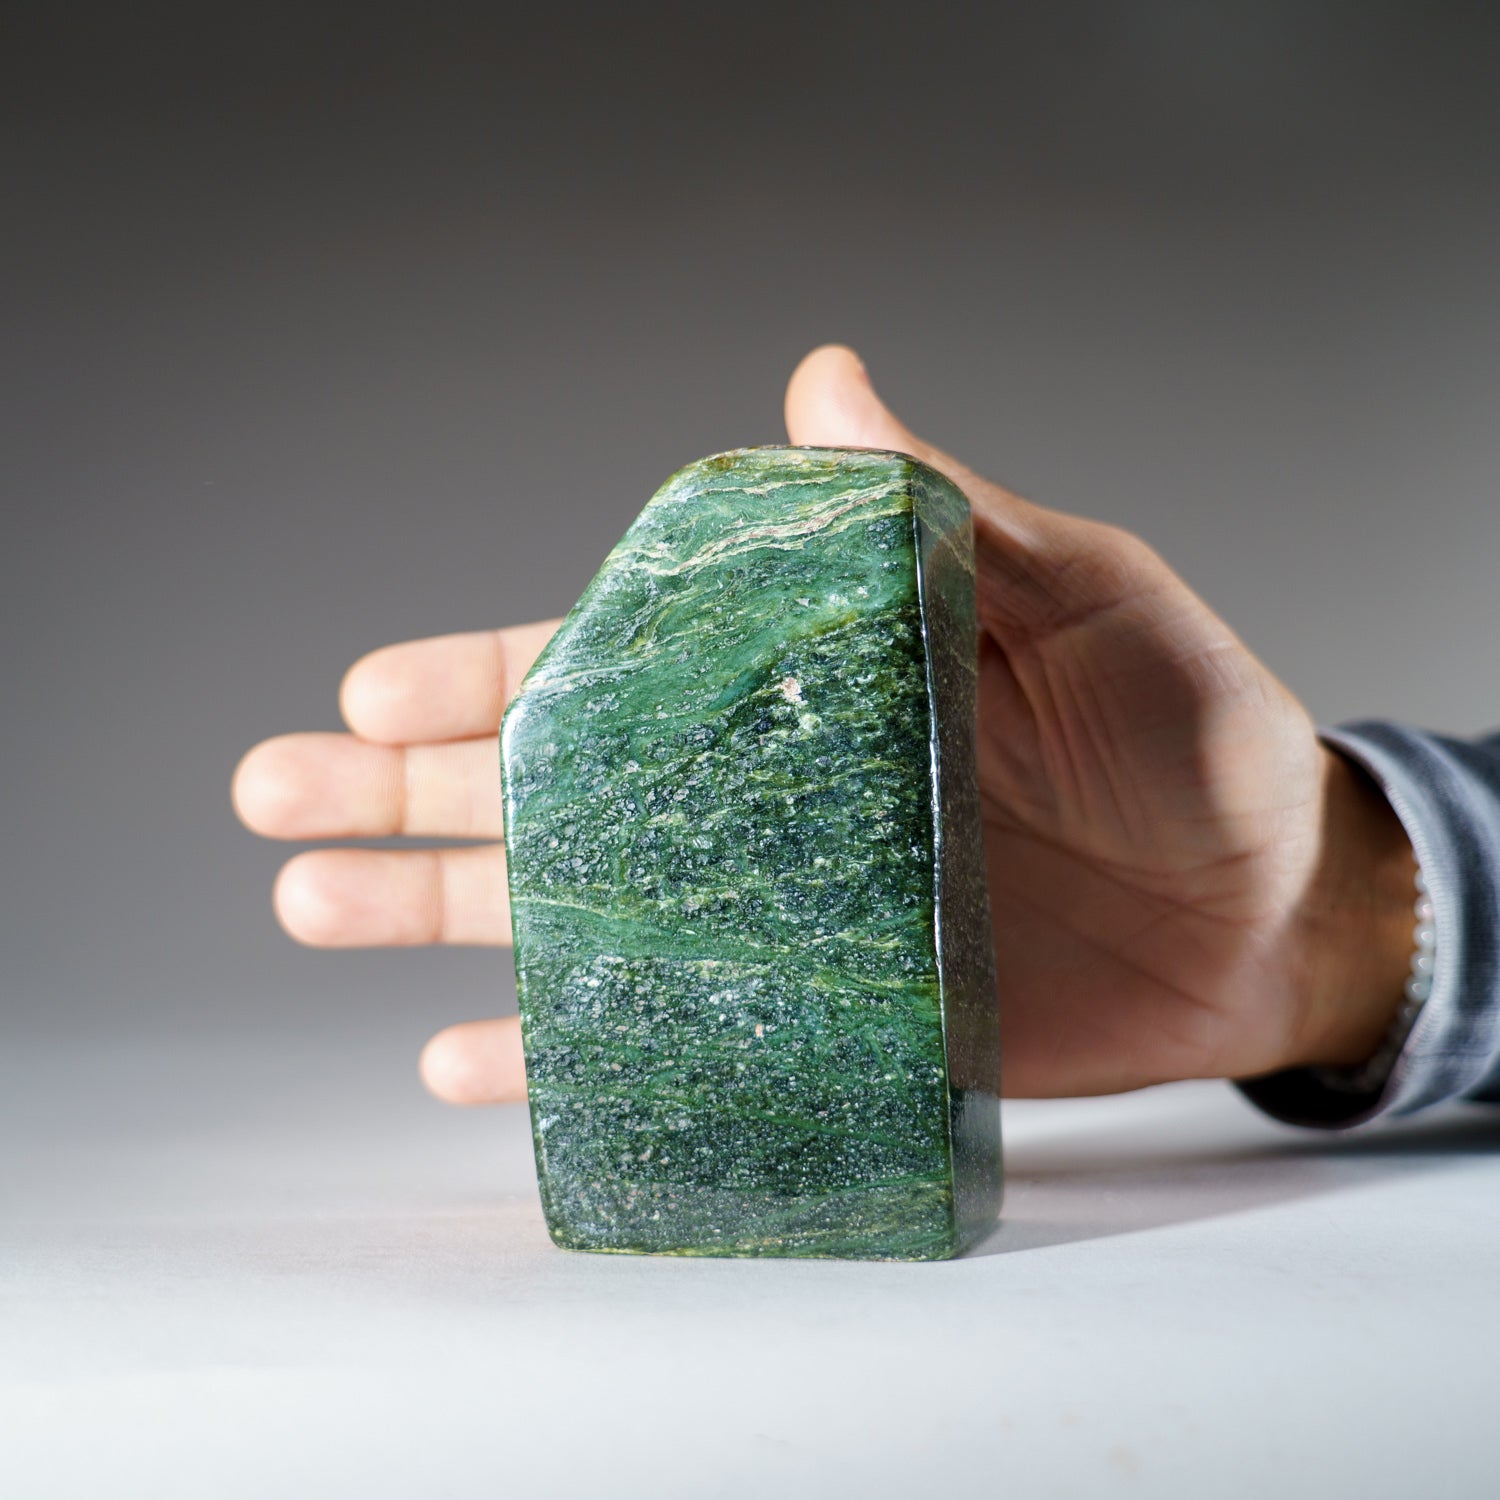 Polished Nephrite Jade Freeform from Pakistan (2.2 lbs)